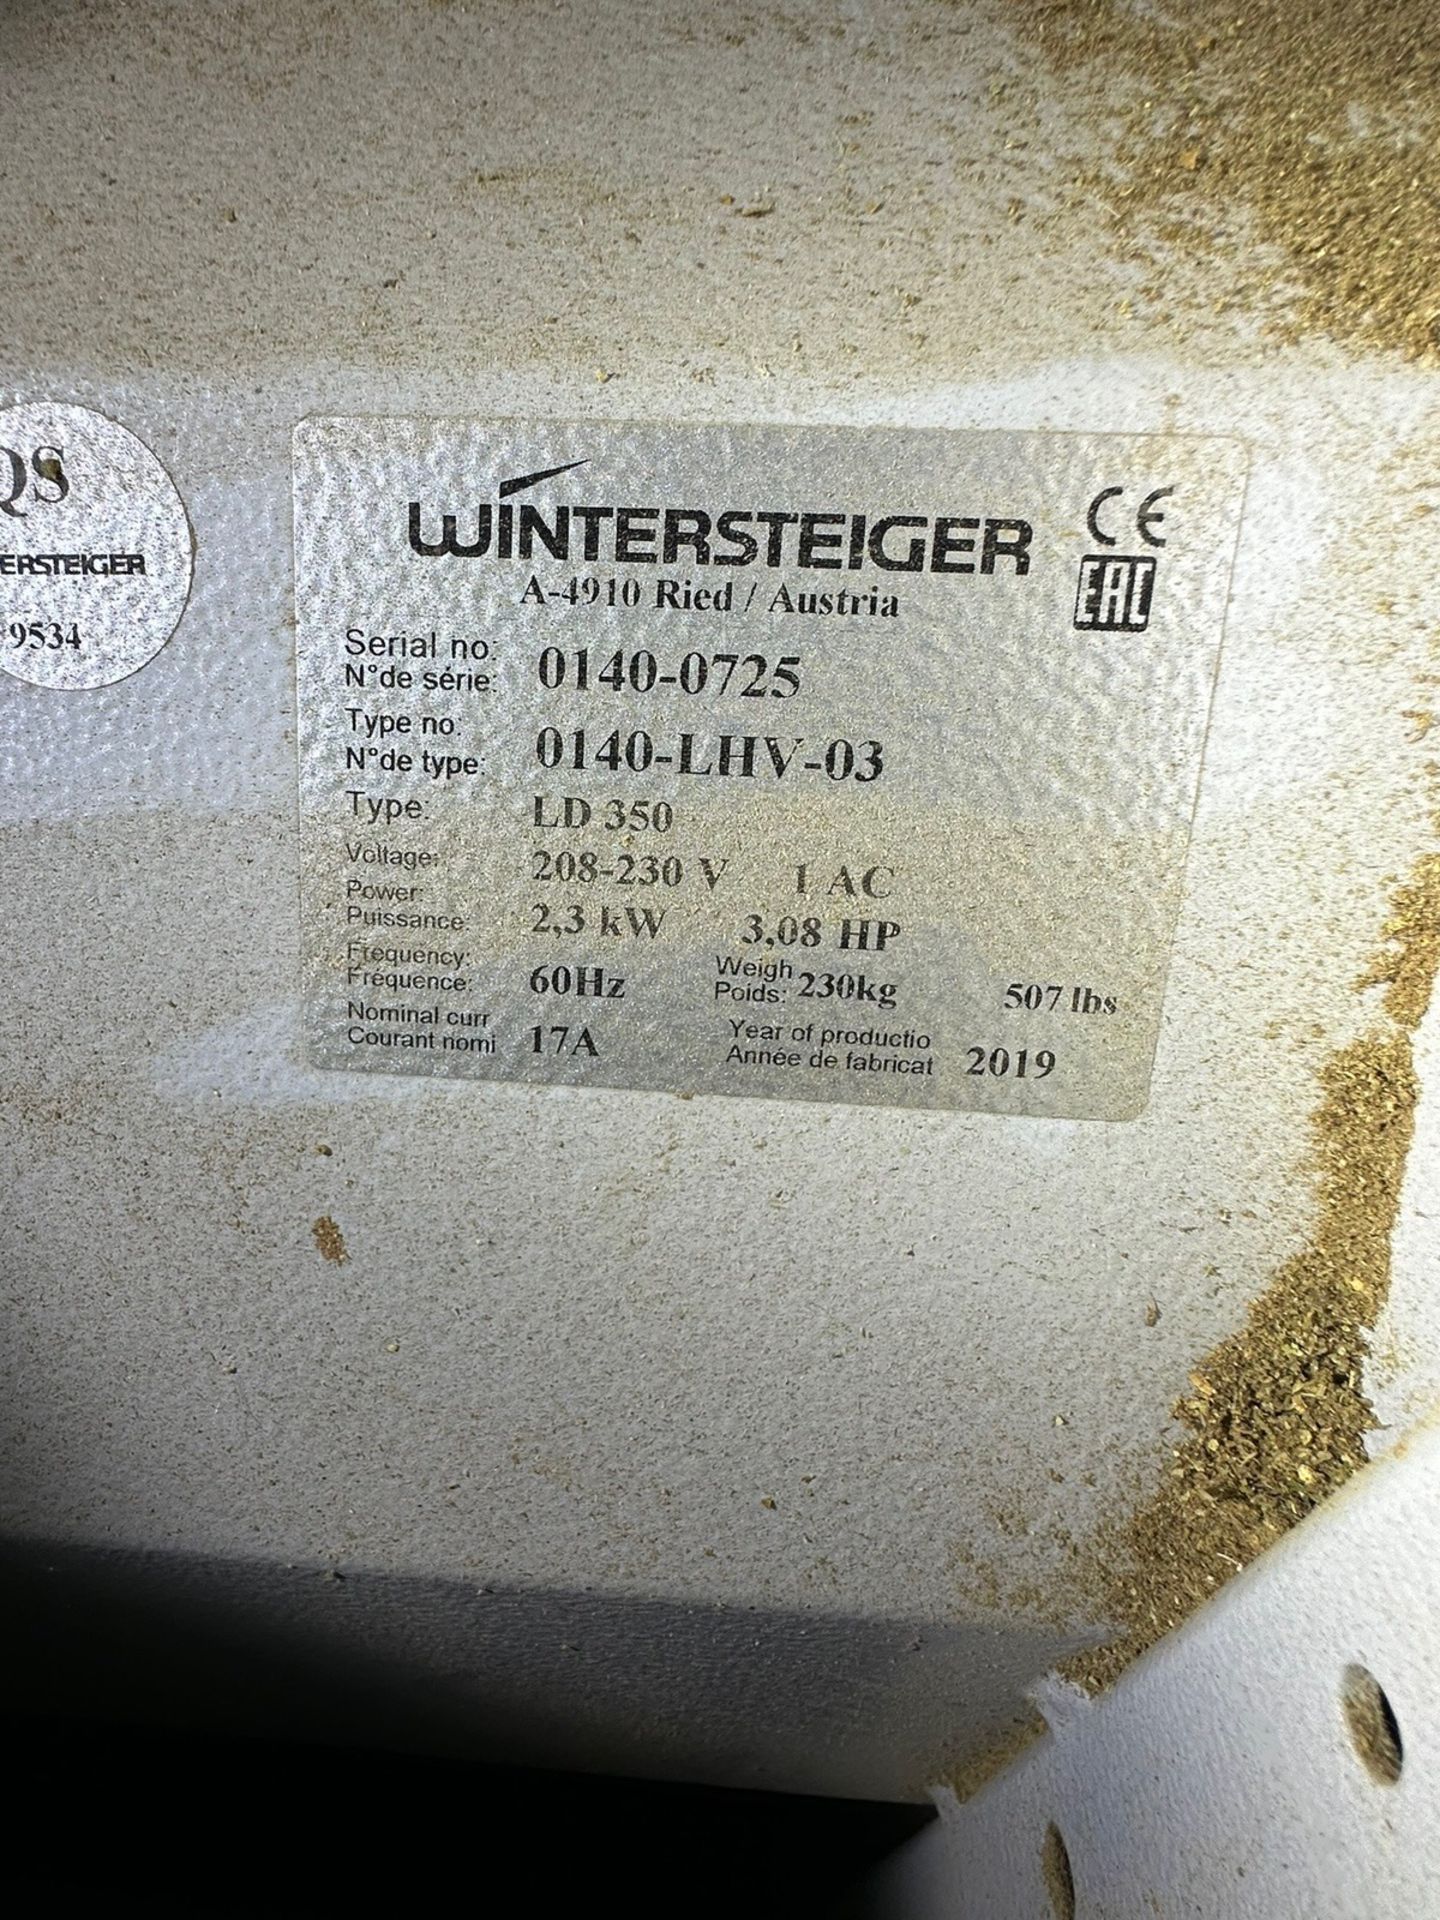 Wintersteiger Grinder, Model LD 350, S/N 0140-0750 | Rig Fee $350 - Image 5 of 5